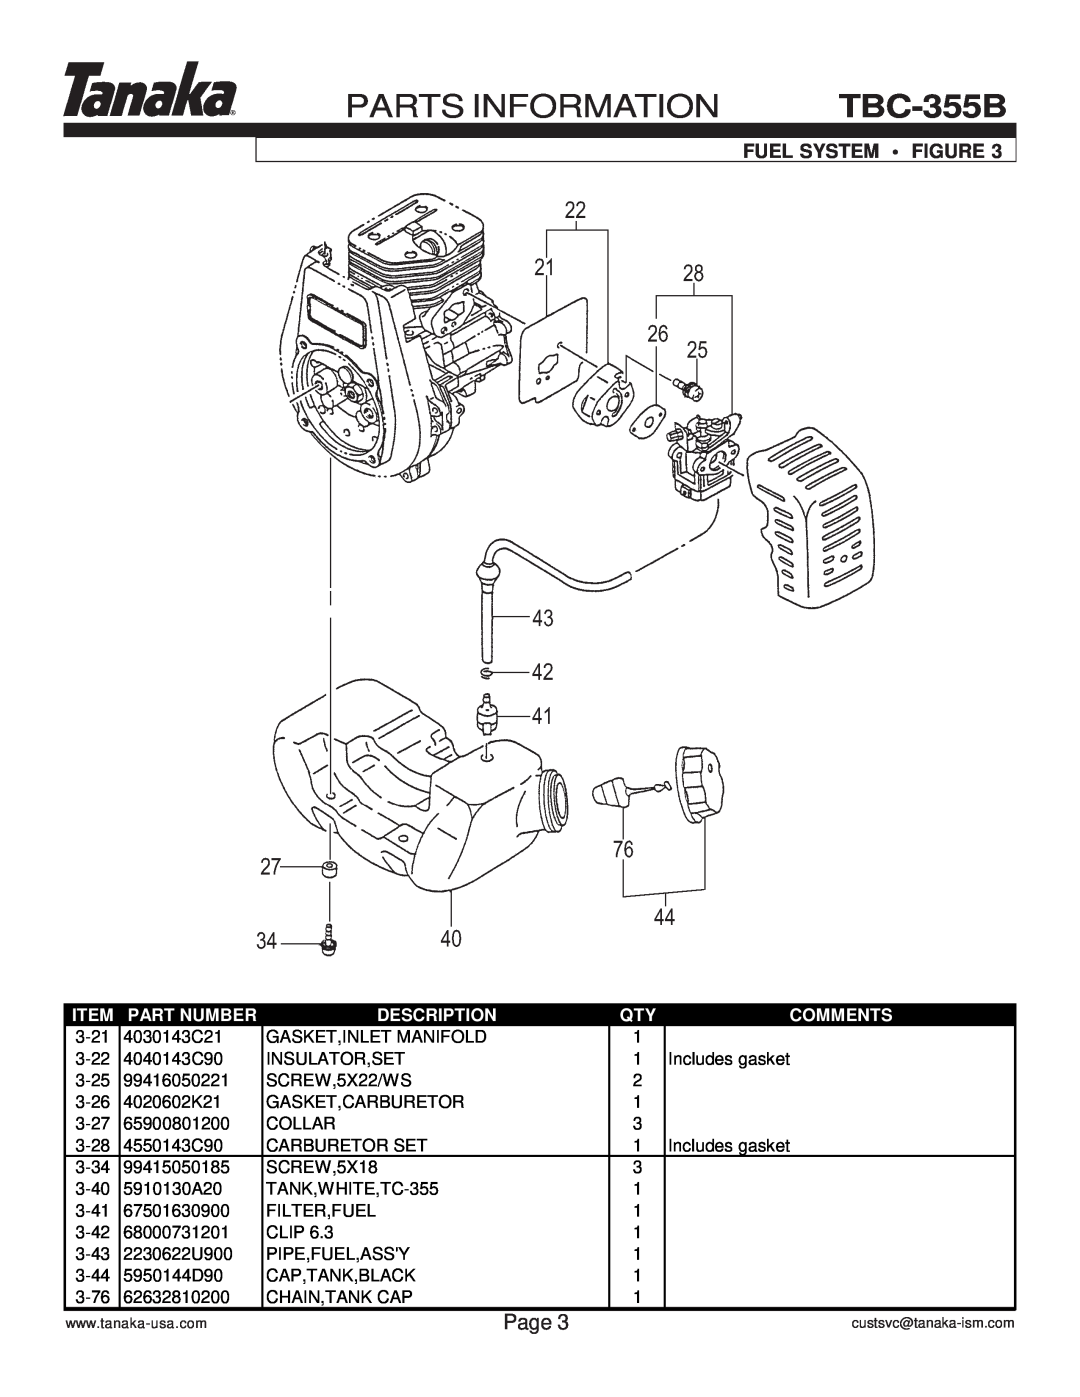 Tanaka TBC-355B manual Parts Information, Fuel System • Figure, Page, Item, Part Number, Description, Comments 